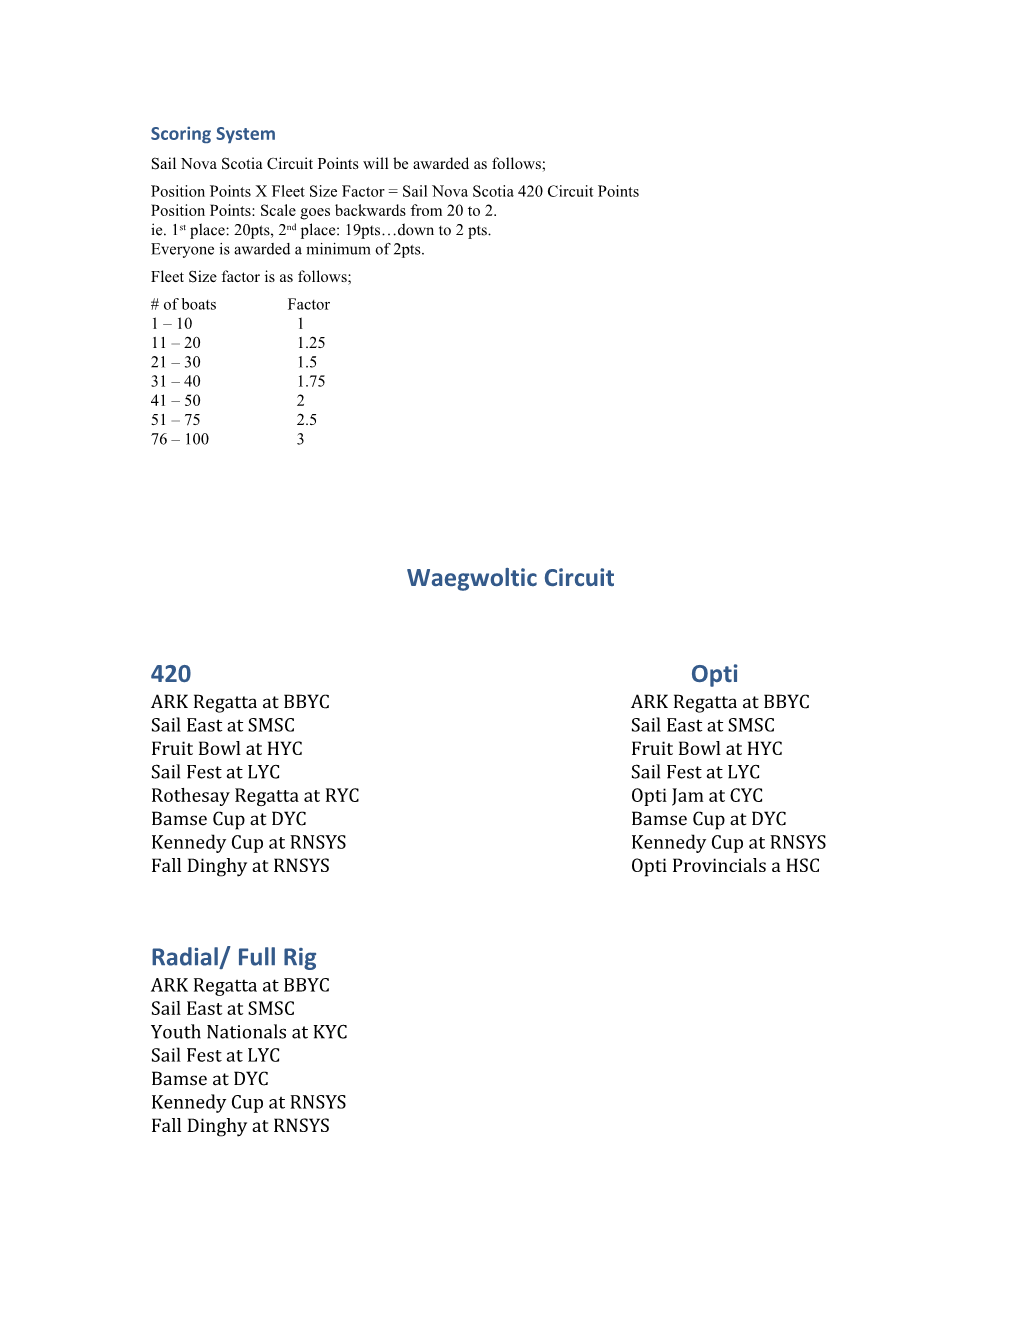 2015 Waegwoltic Regatta Circuit Information